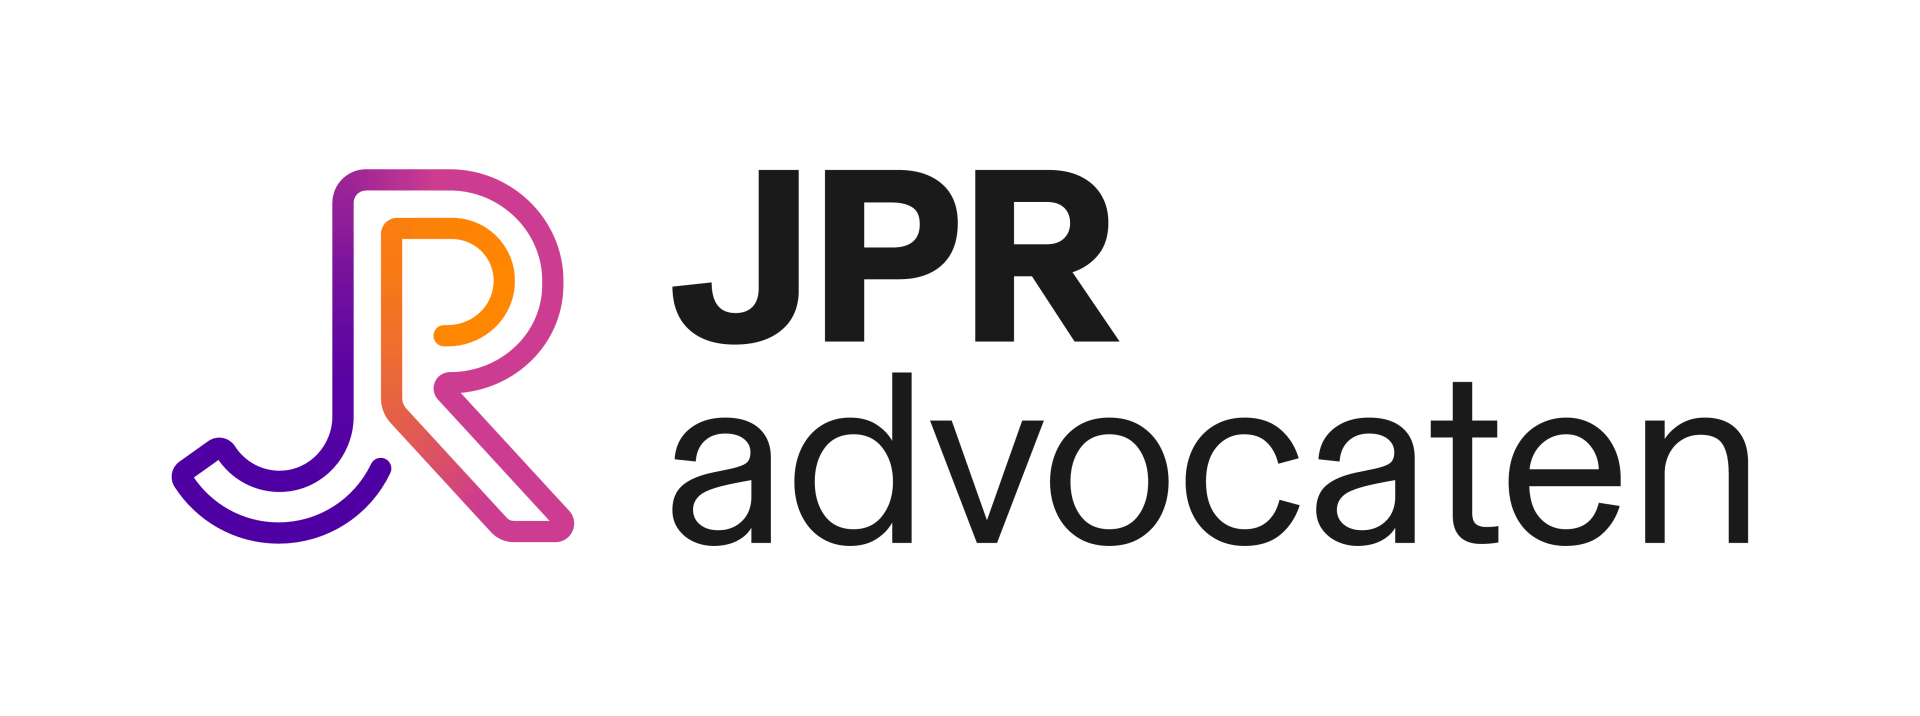 JPR advocaten RGB Logo FC